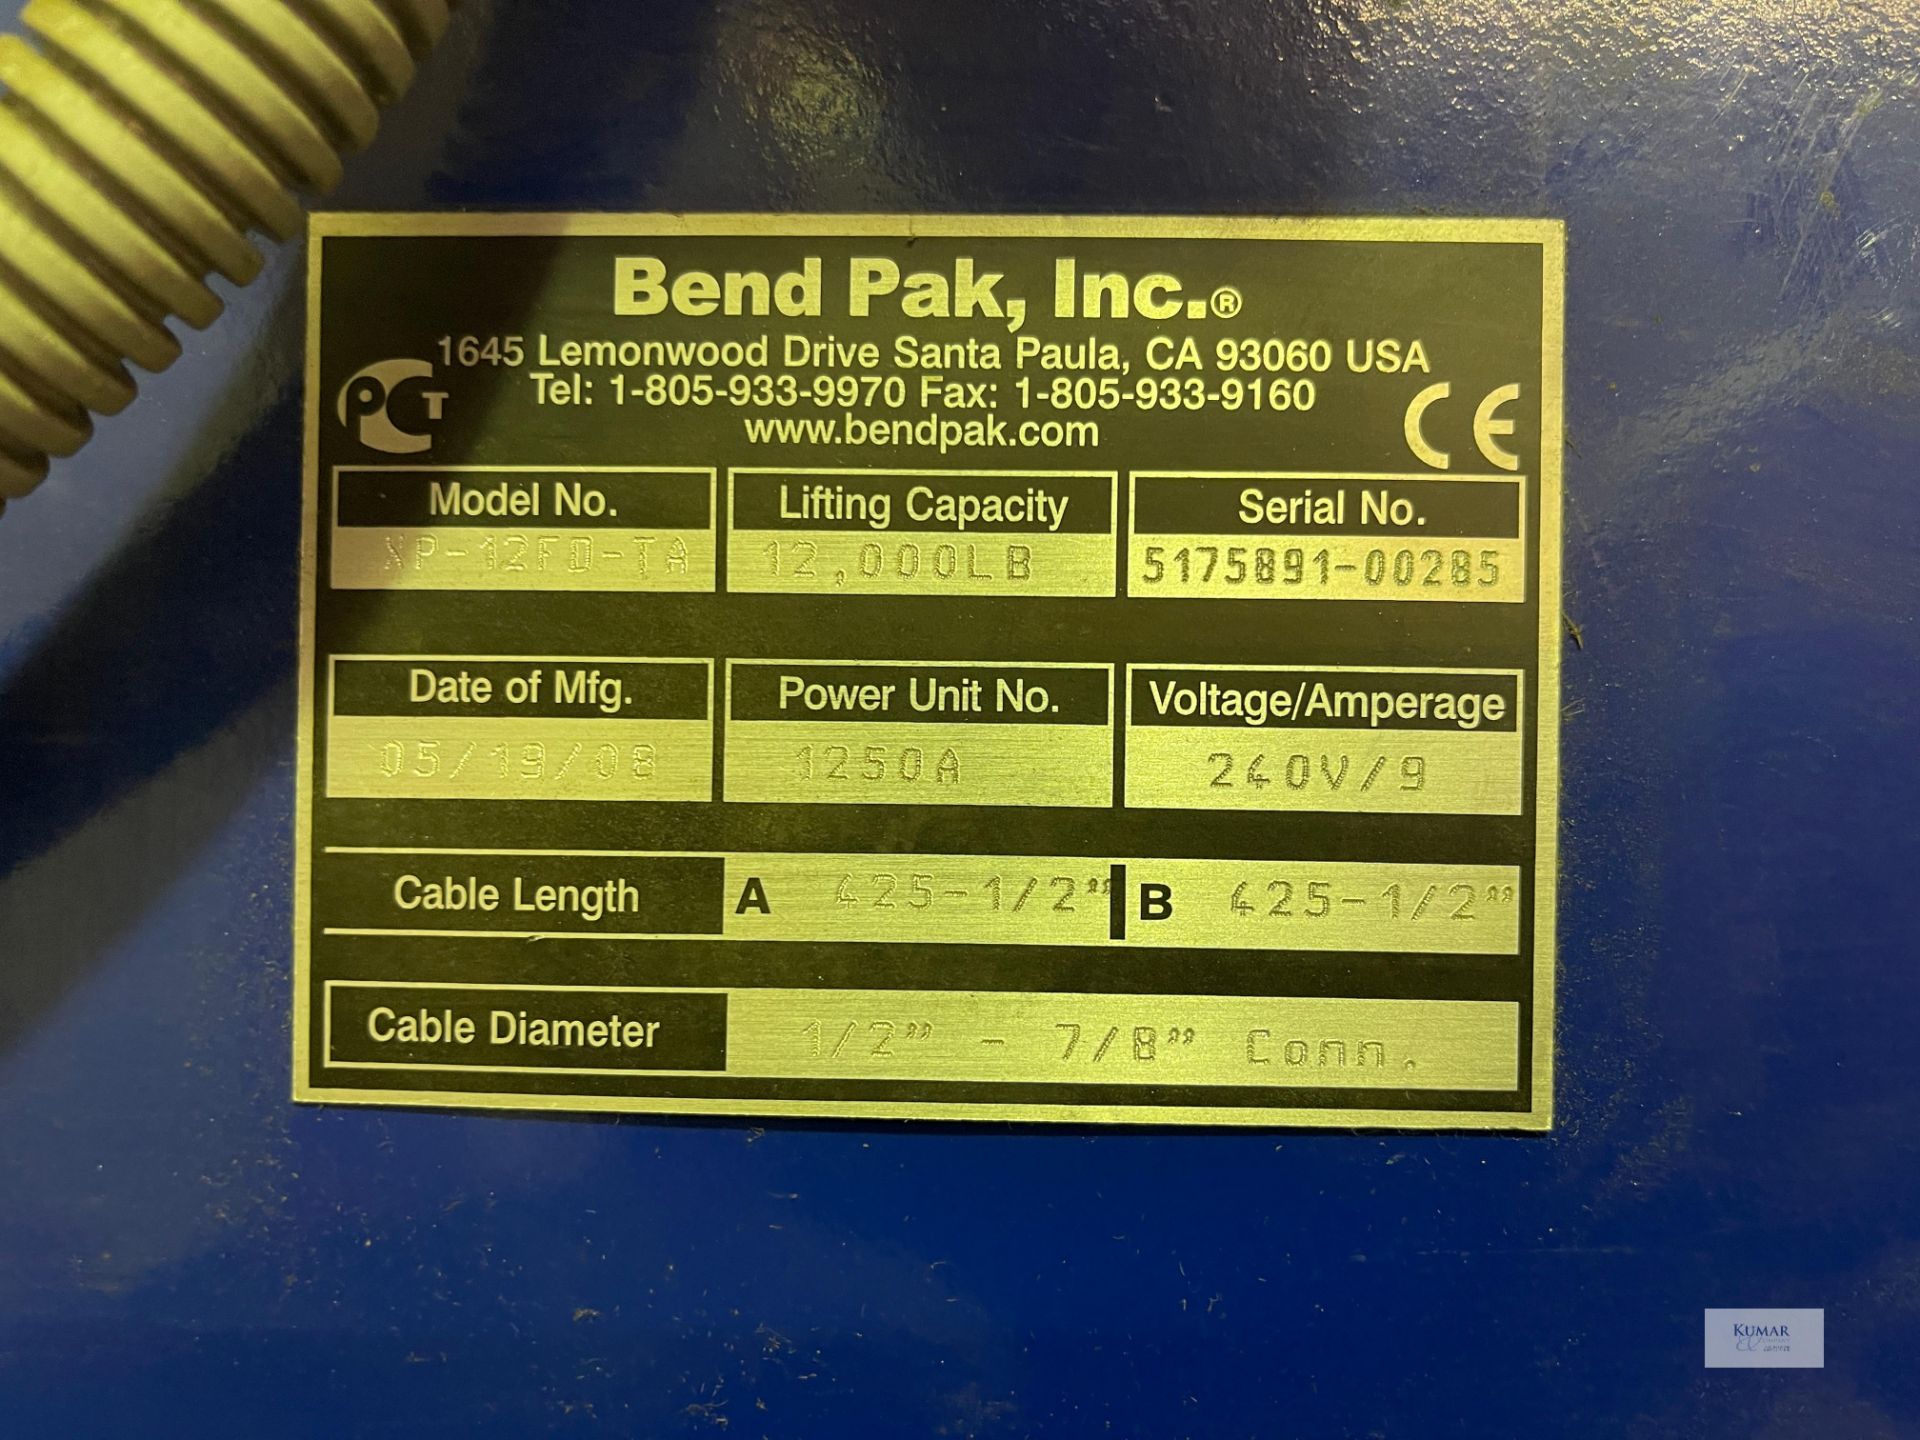 BendPak XP-12FD-TA Two Post Vehicle Lift, Capacity 12,000 Lb (4,000Kg), Serial No. 5175891-00285 ( - Image 4 of 4